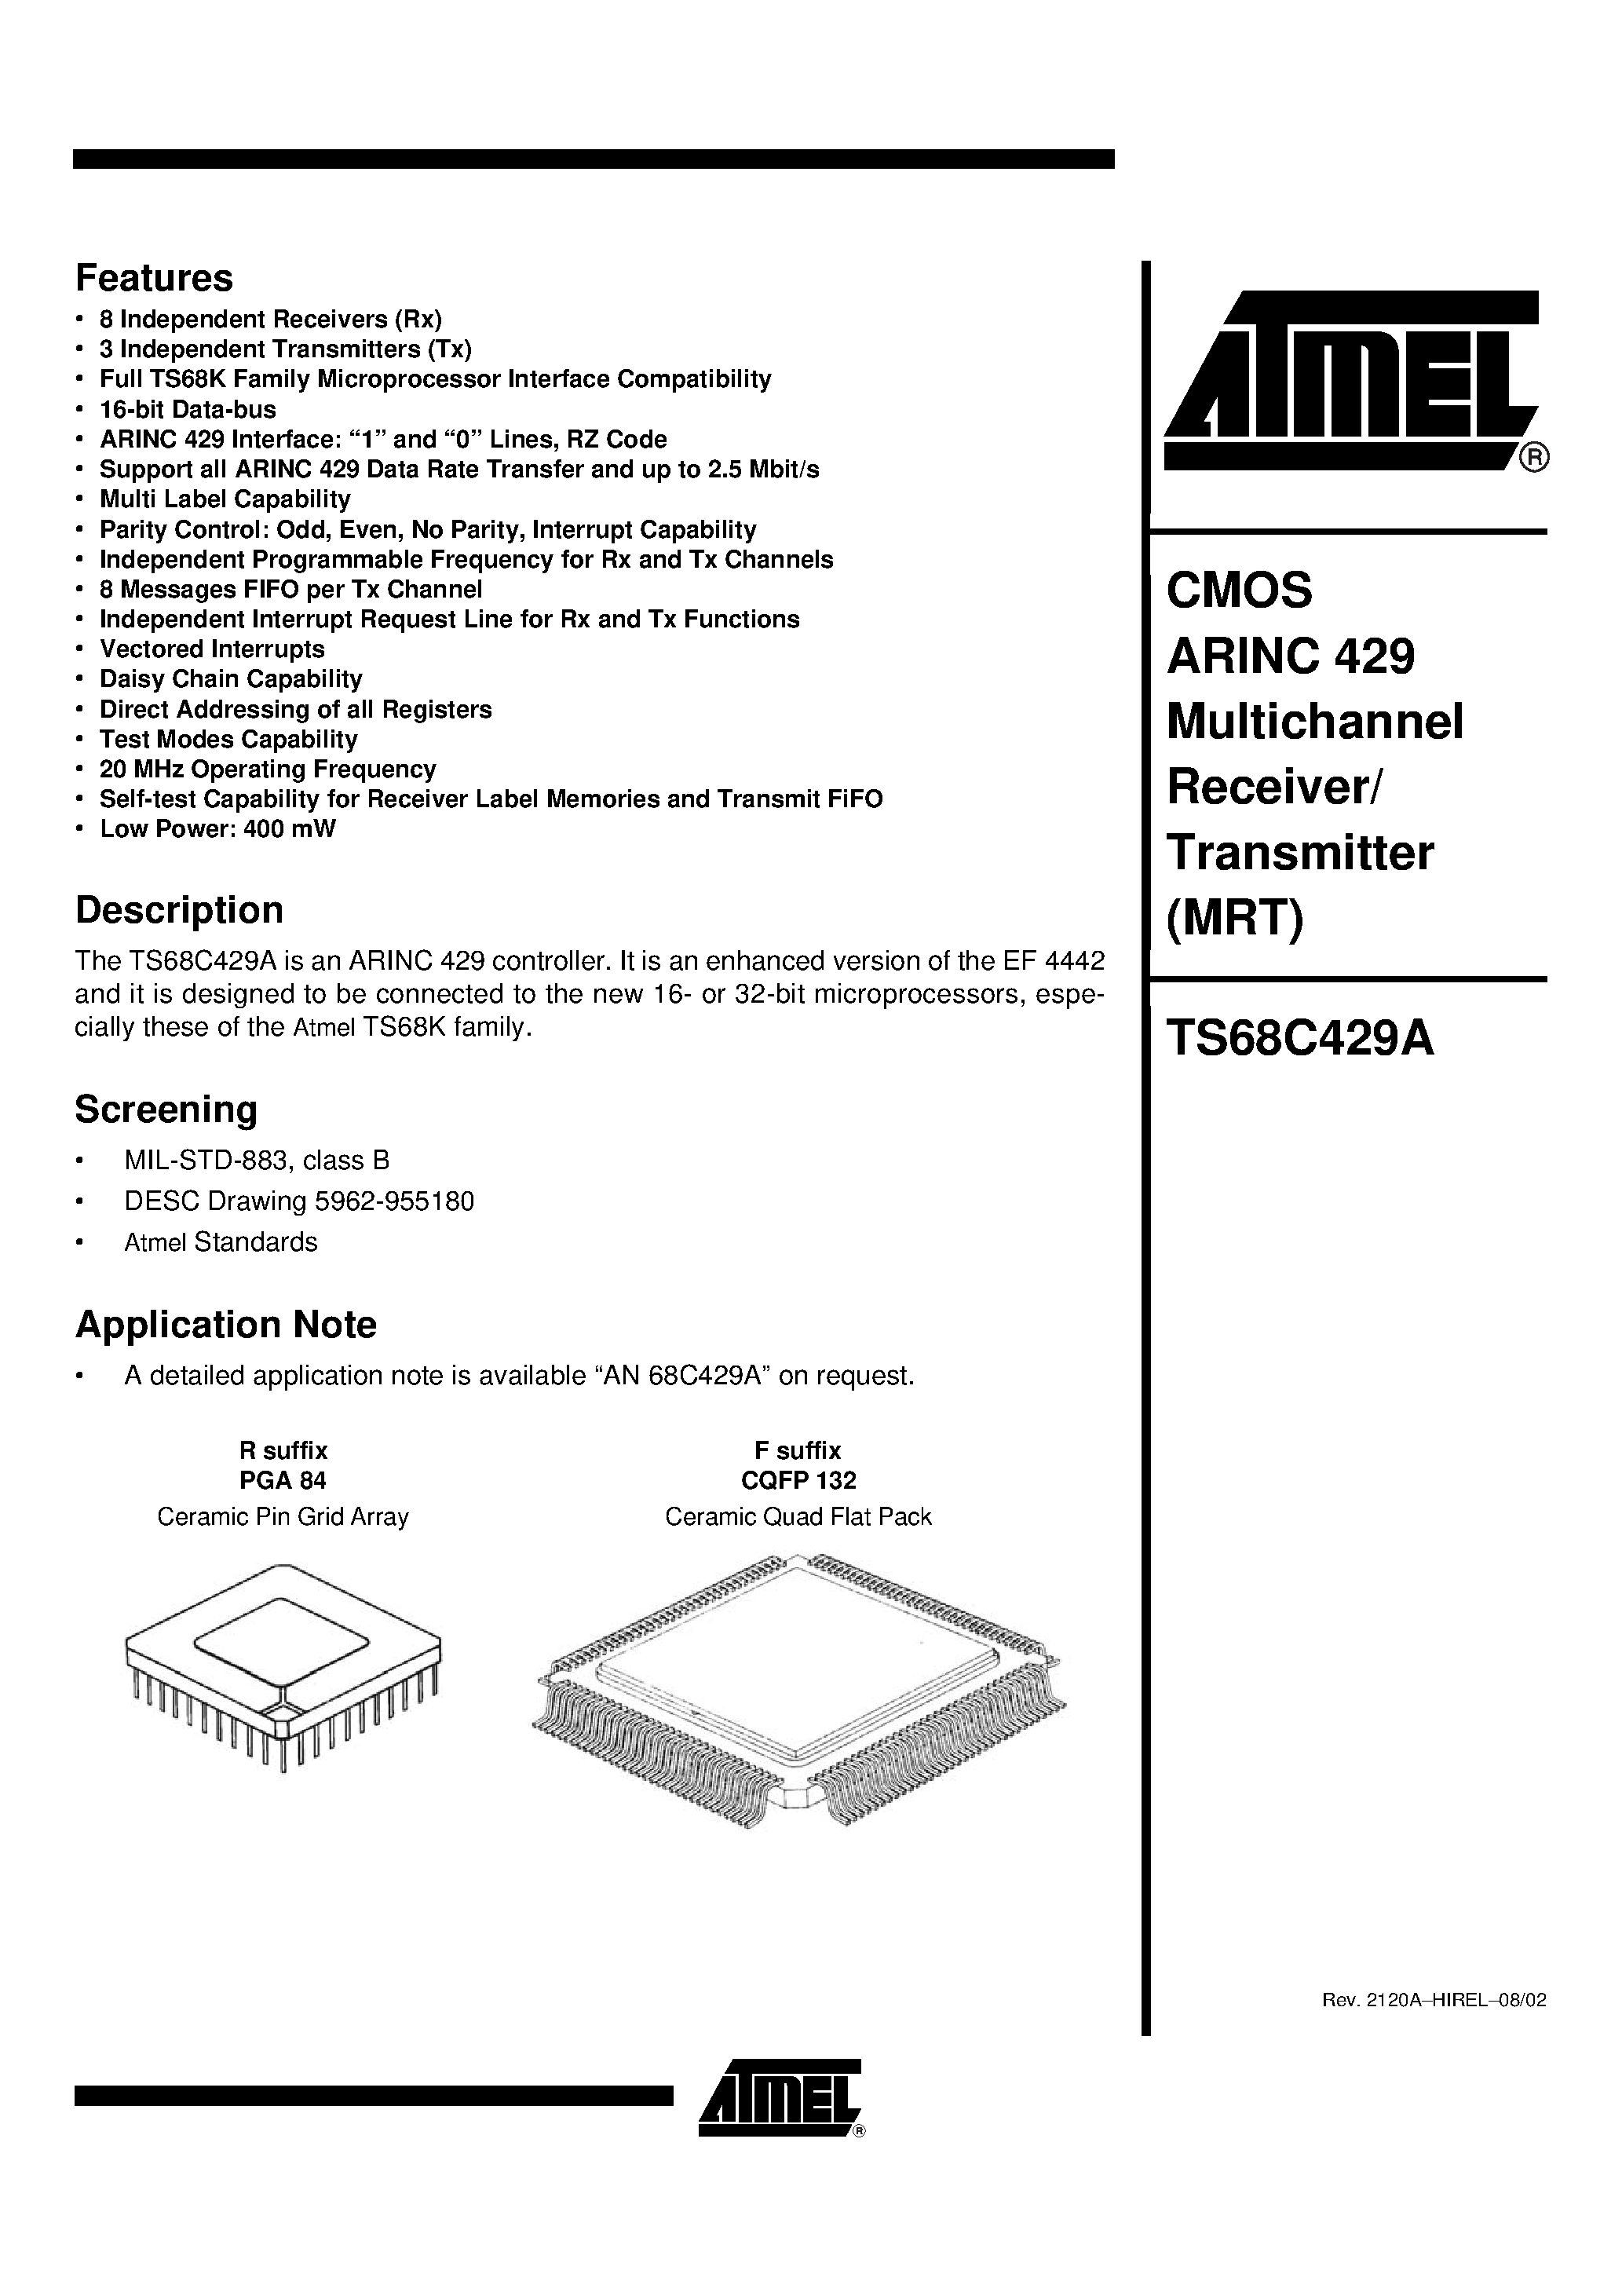 Datasheet TS68C429AMR - CMOS ARINC 429 Multichannel Receiver/ Transmitter MRT page 1